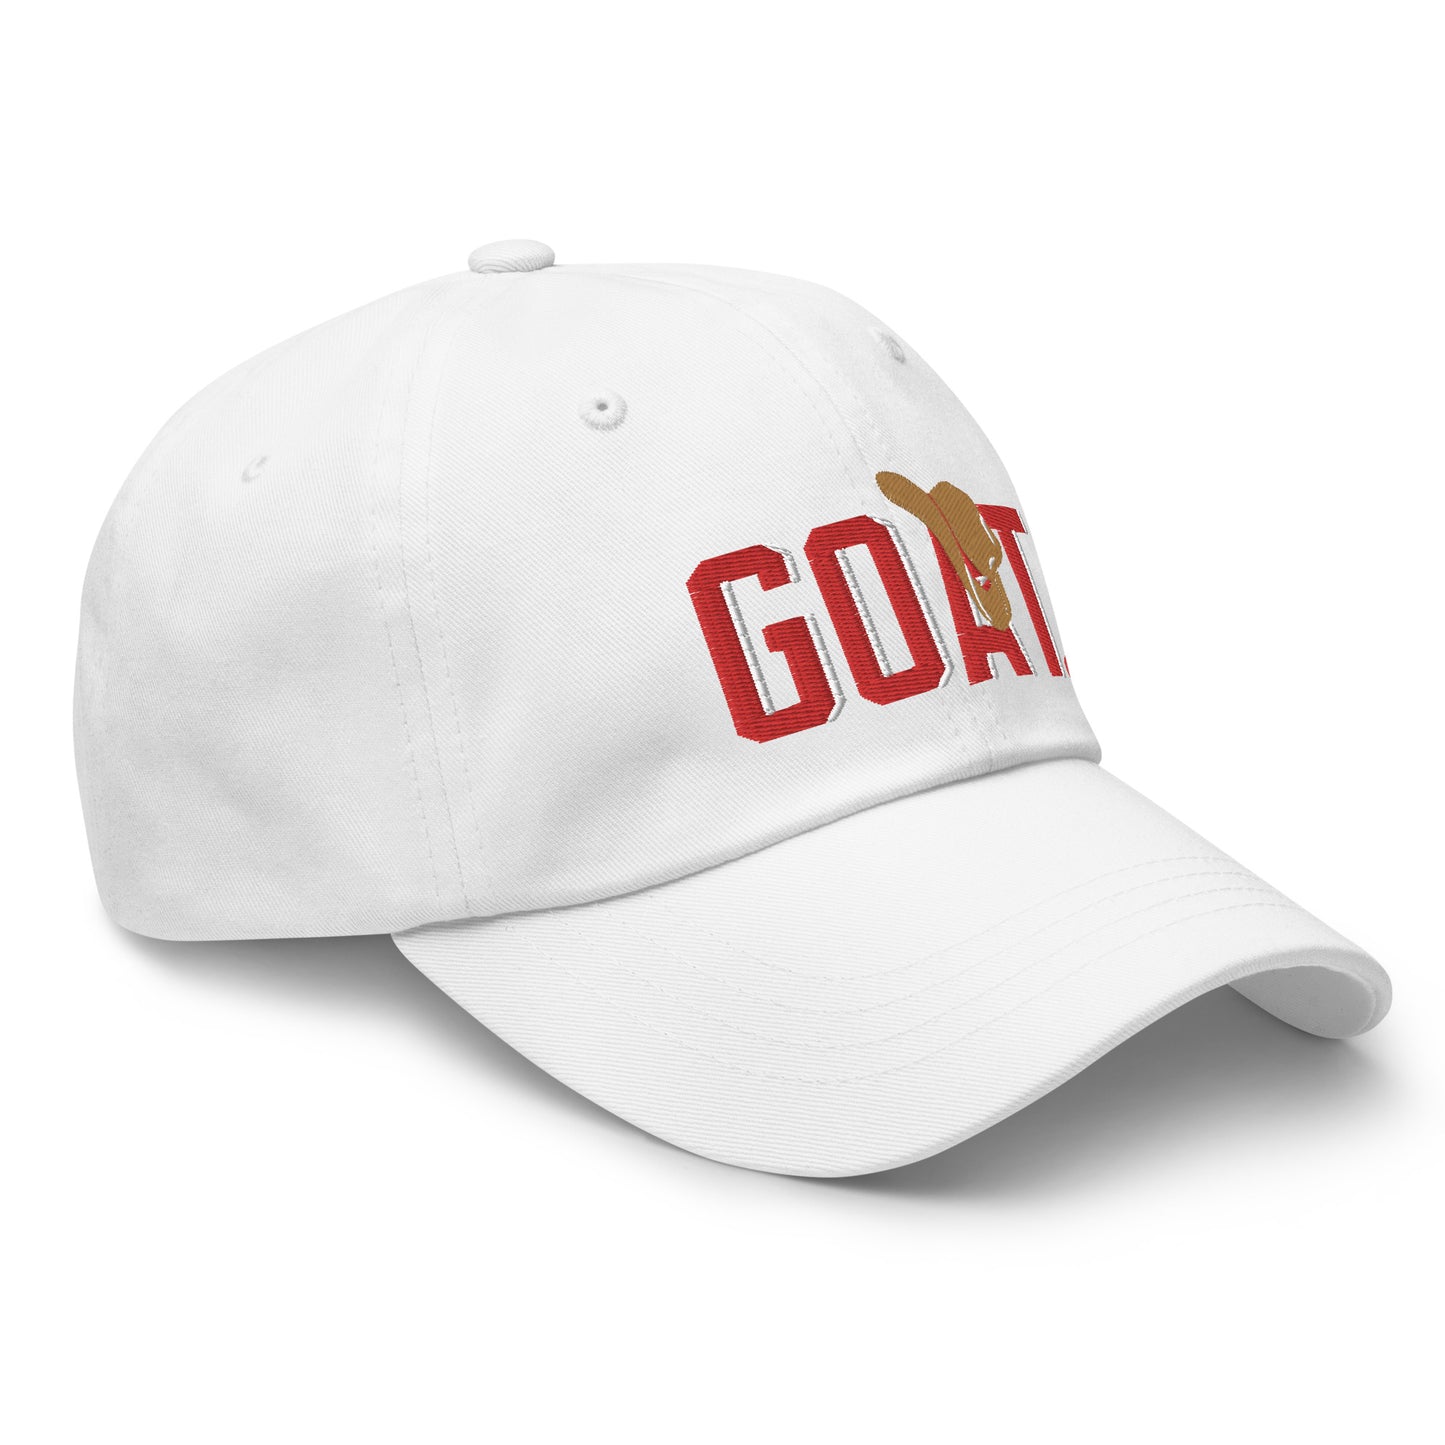 GOAT - Nick Saban - Alabama Legacy Hat